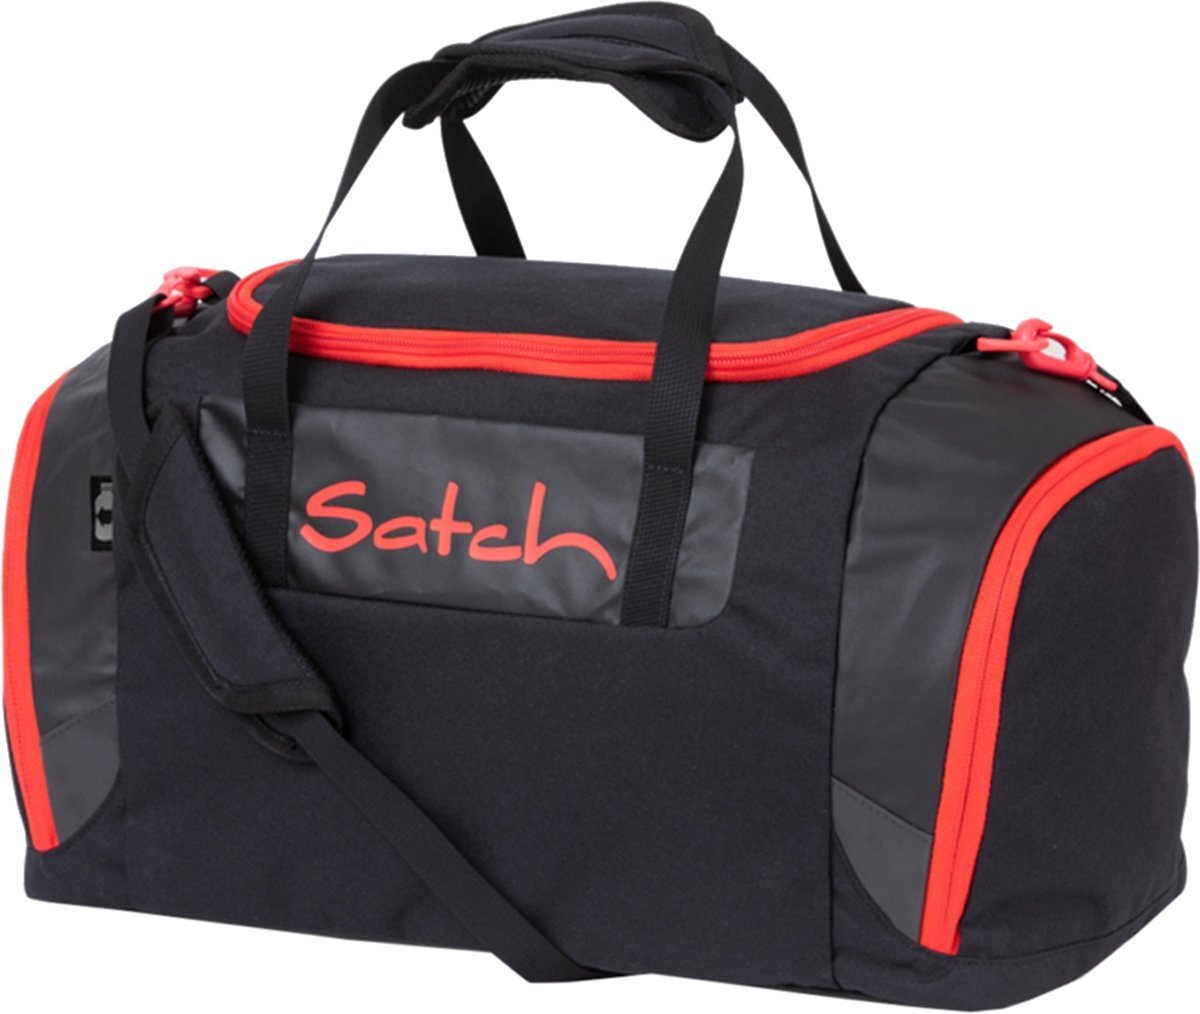 Satch Fire Phantom Sporttas, uniseks, kinderen, zwart/rood, 25 l, Zwart/Rood, 25 L, Fire Phantom